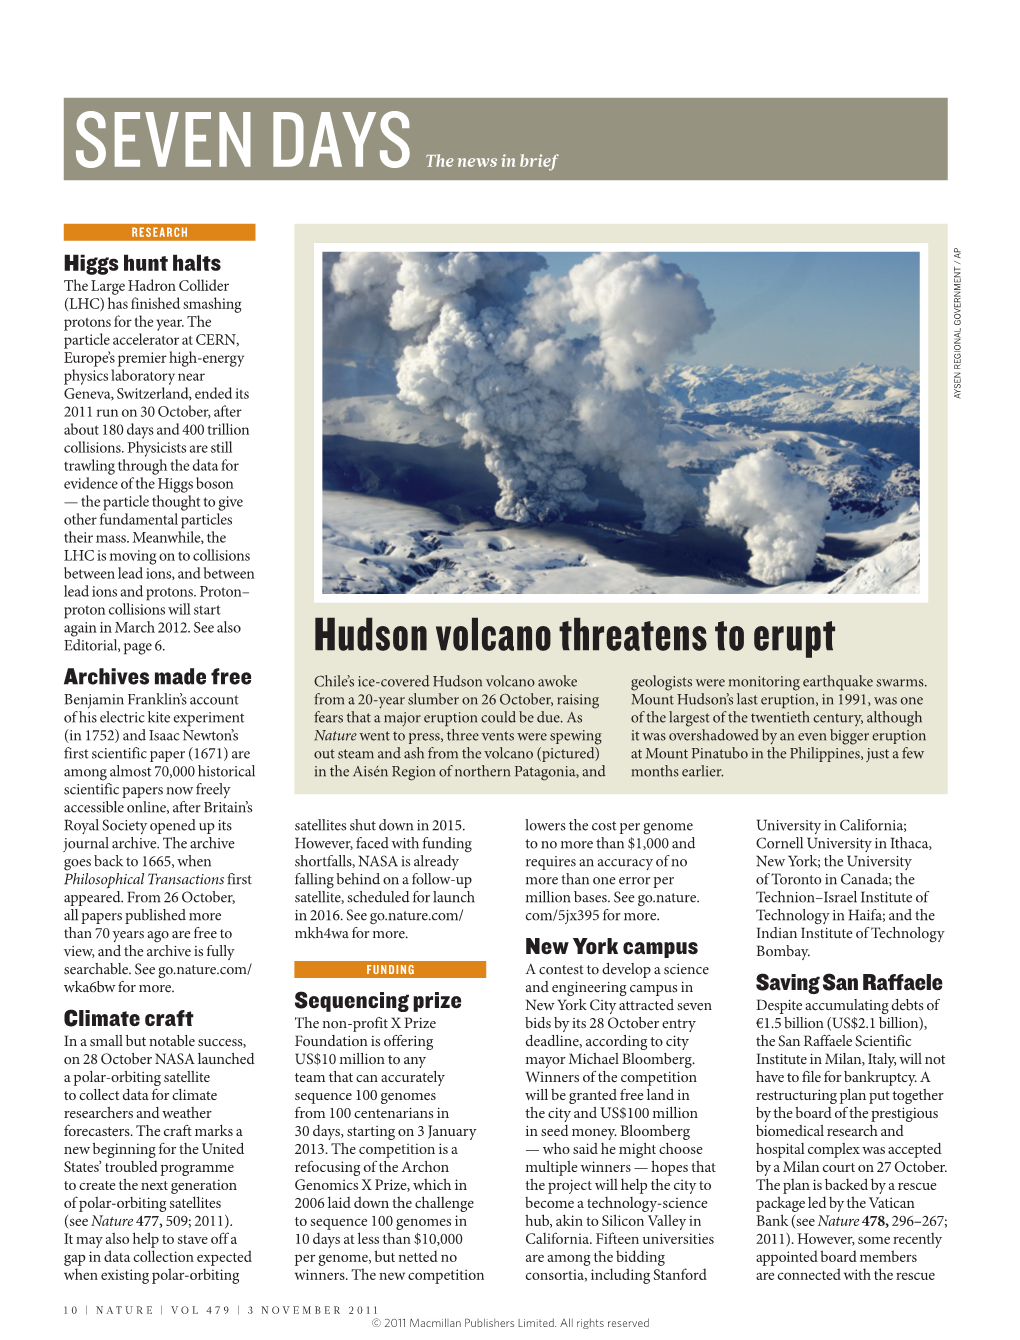 Hudson Volcano Threatens to Erupt